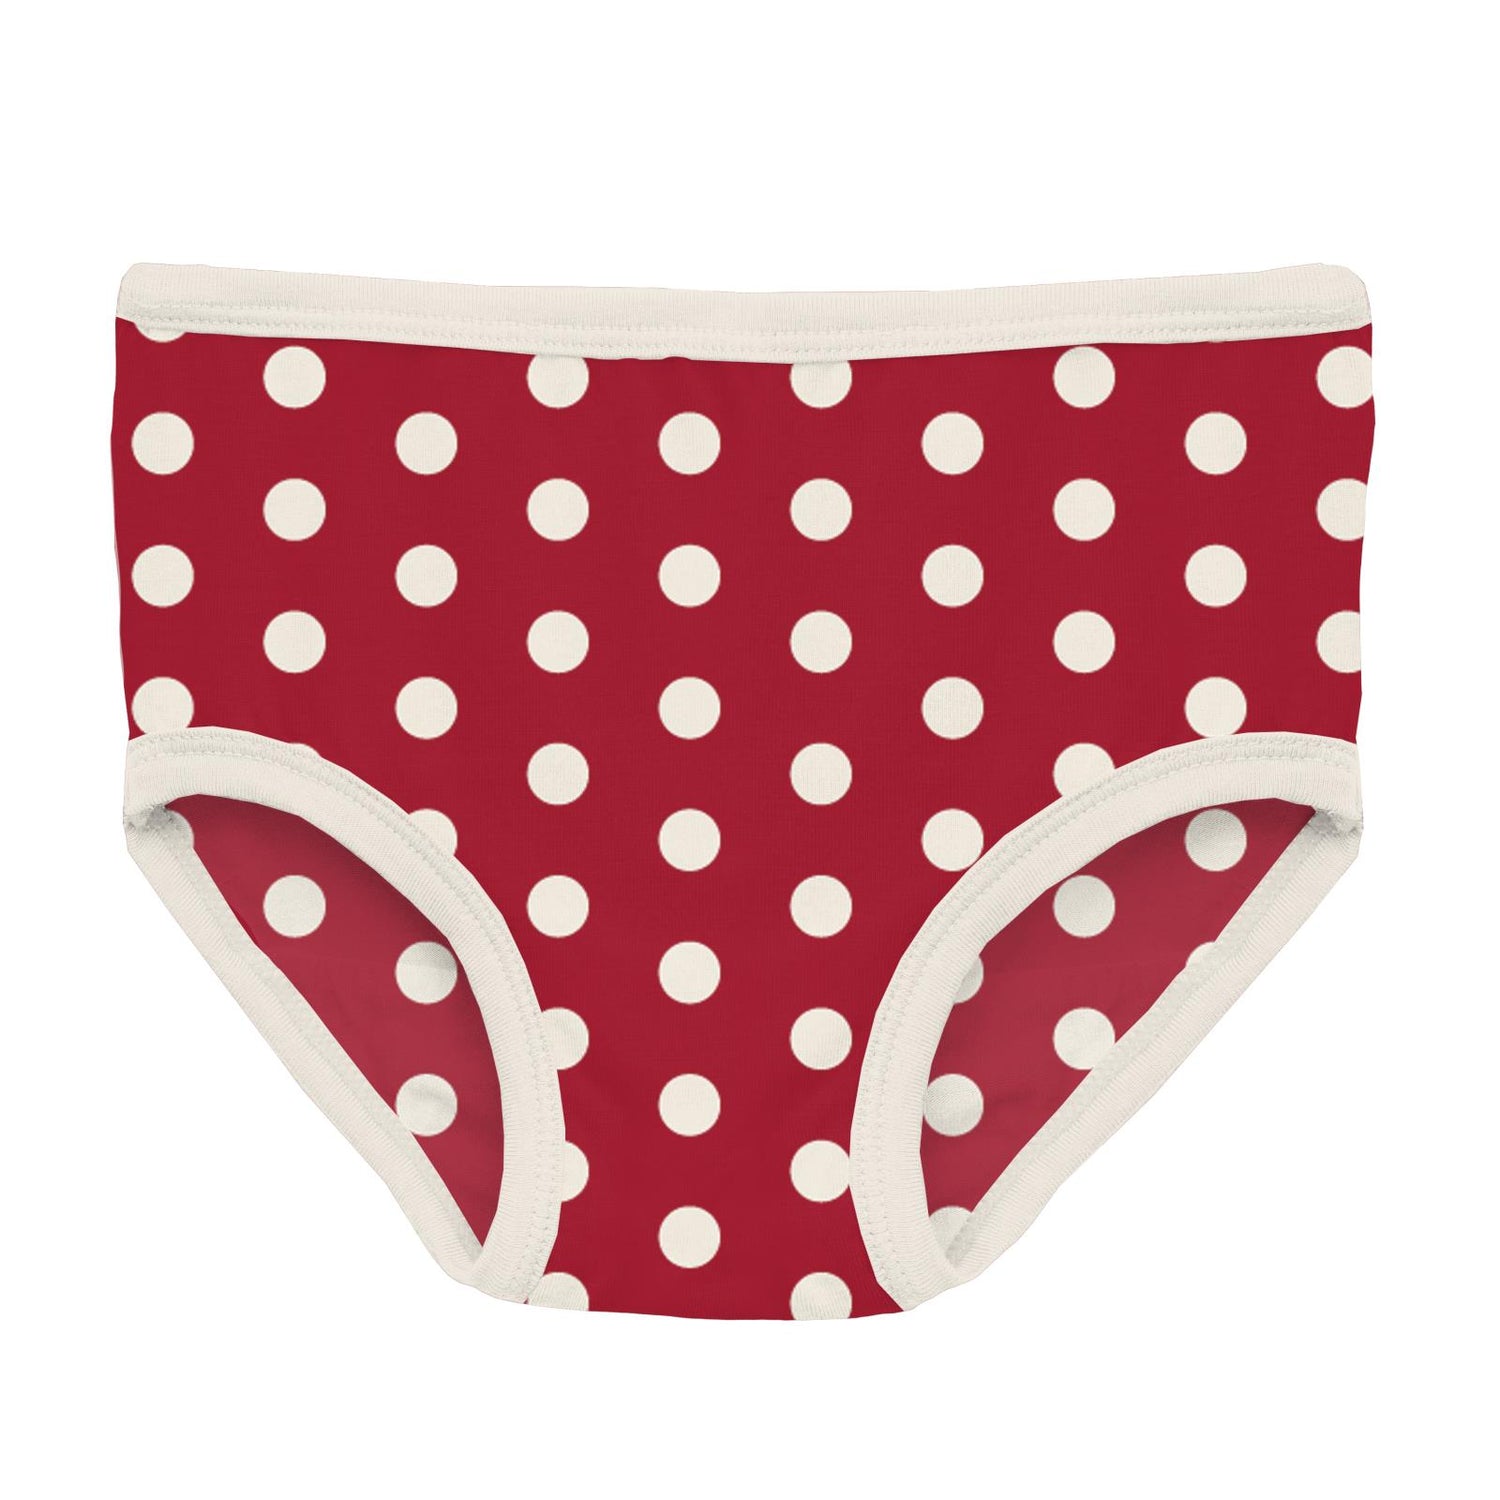 Print Girl's Underwear in Candy Apple Polka Dots